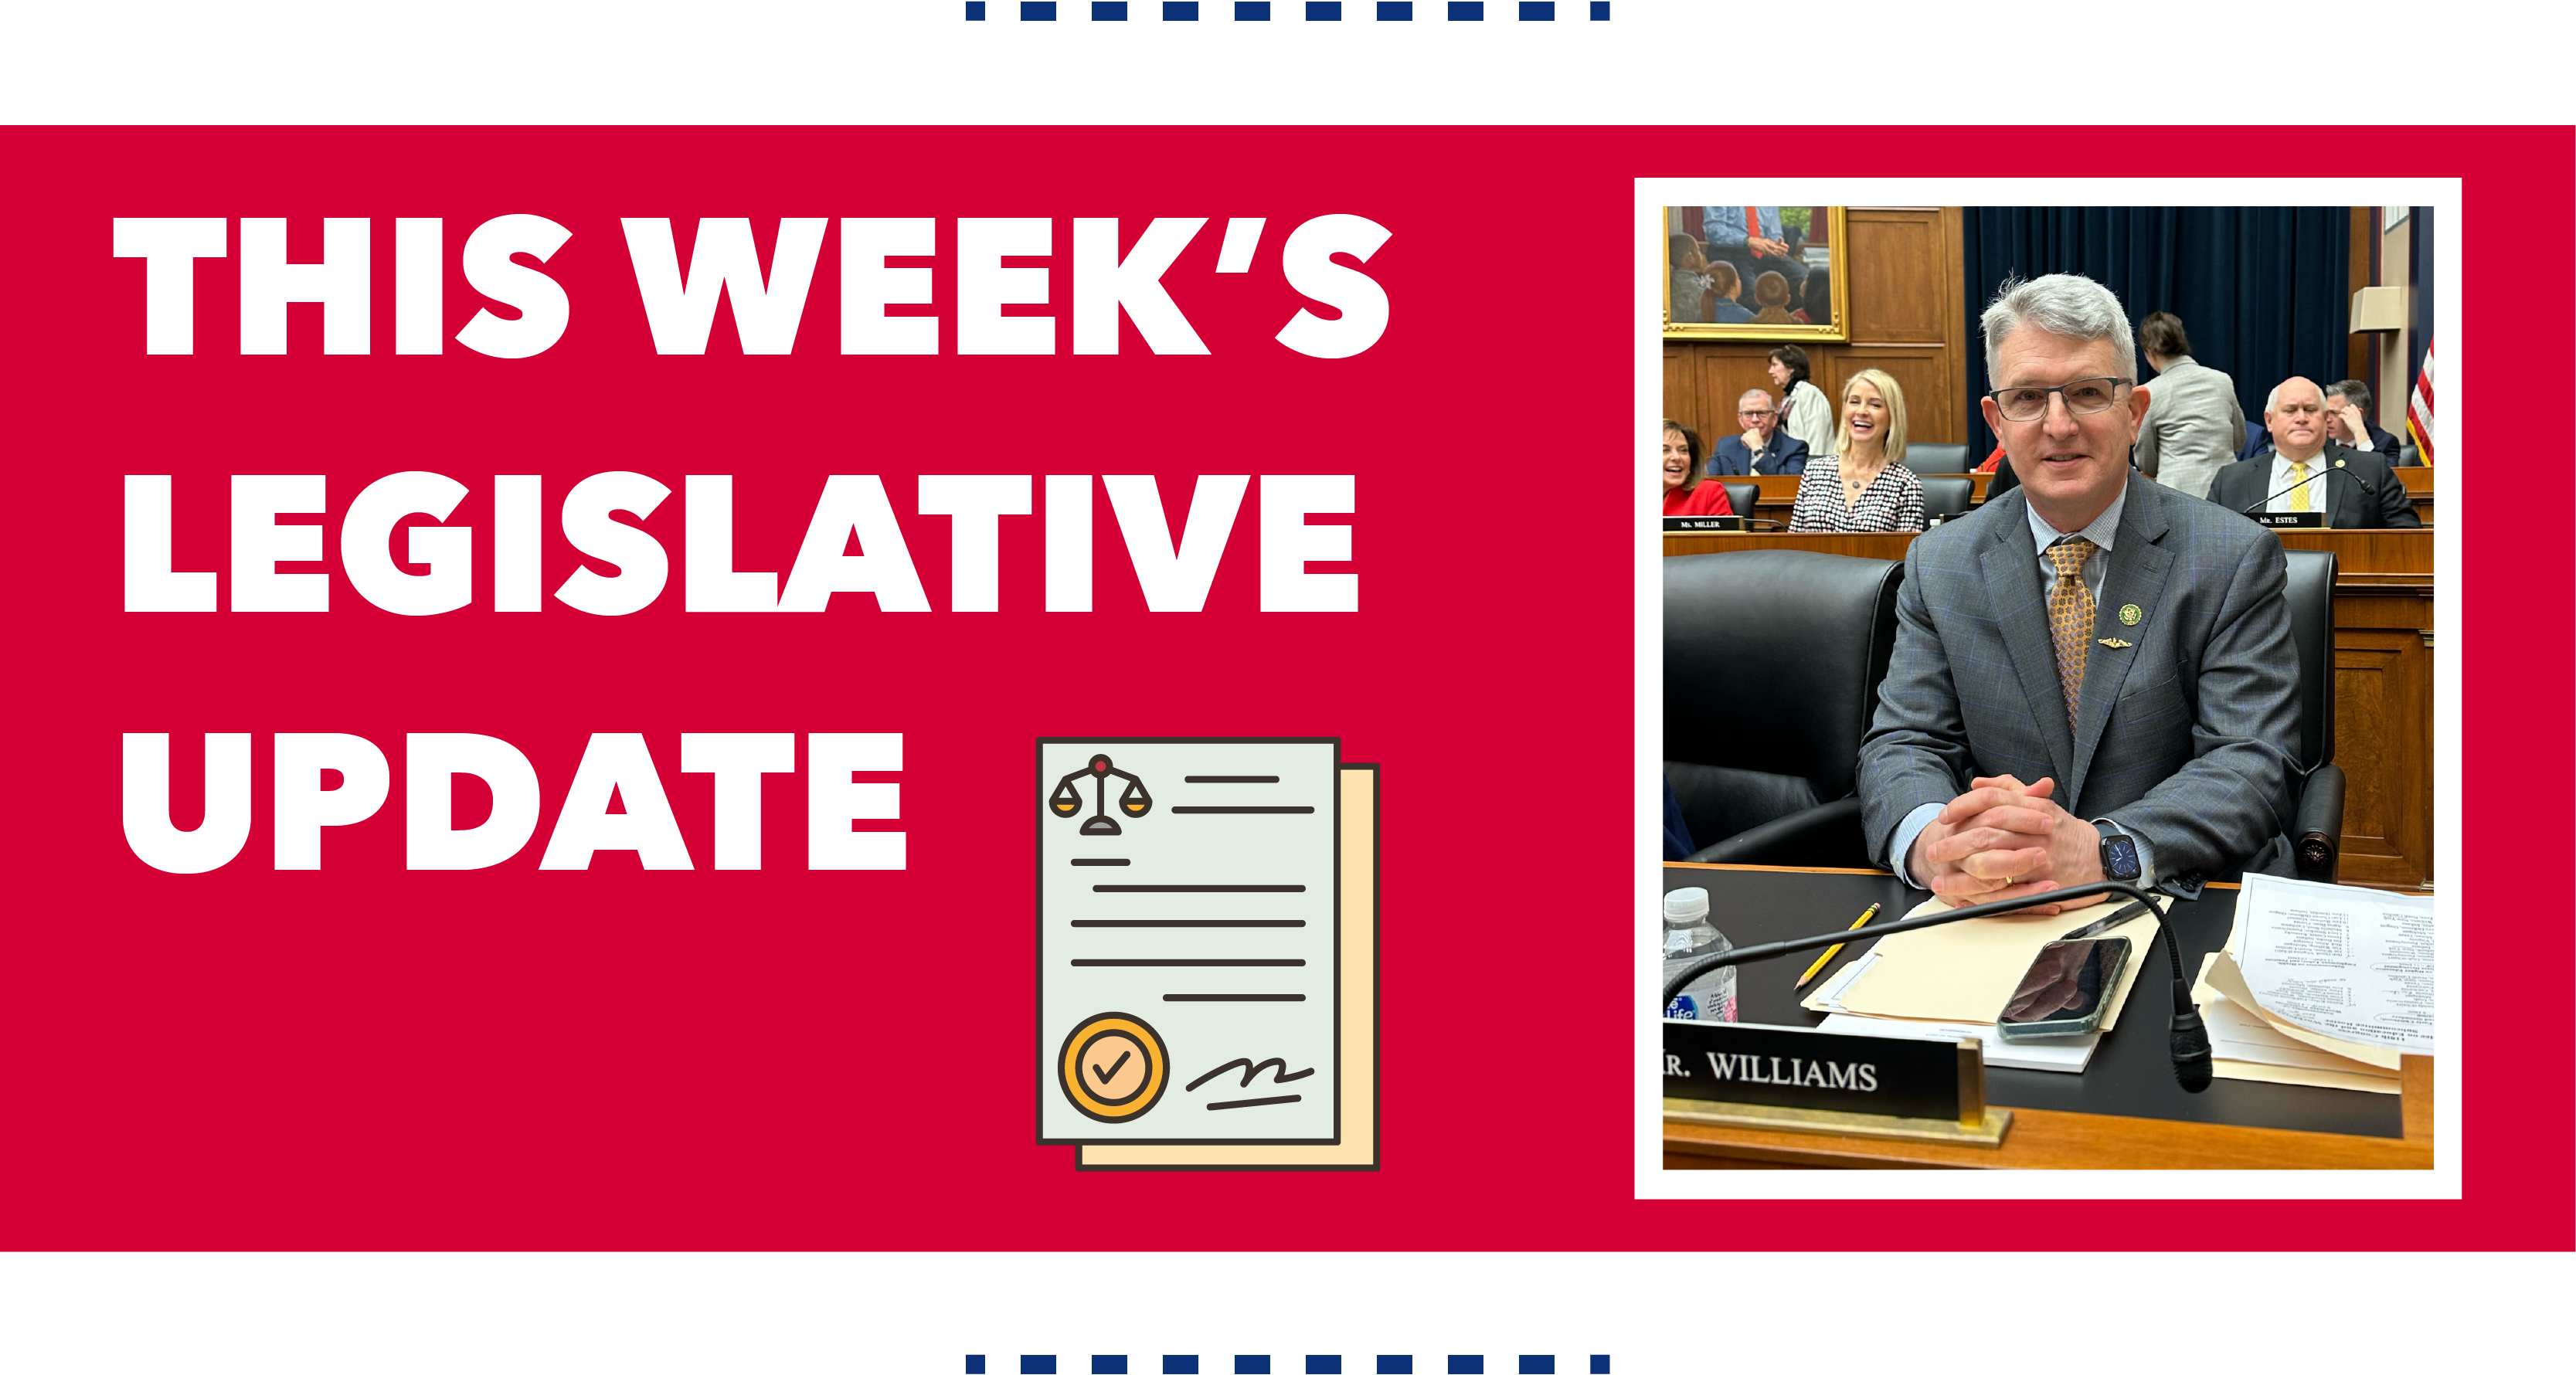 DASHED - this week's legislative update